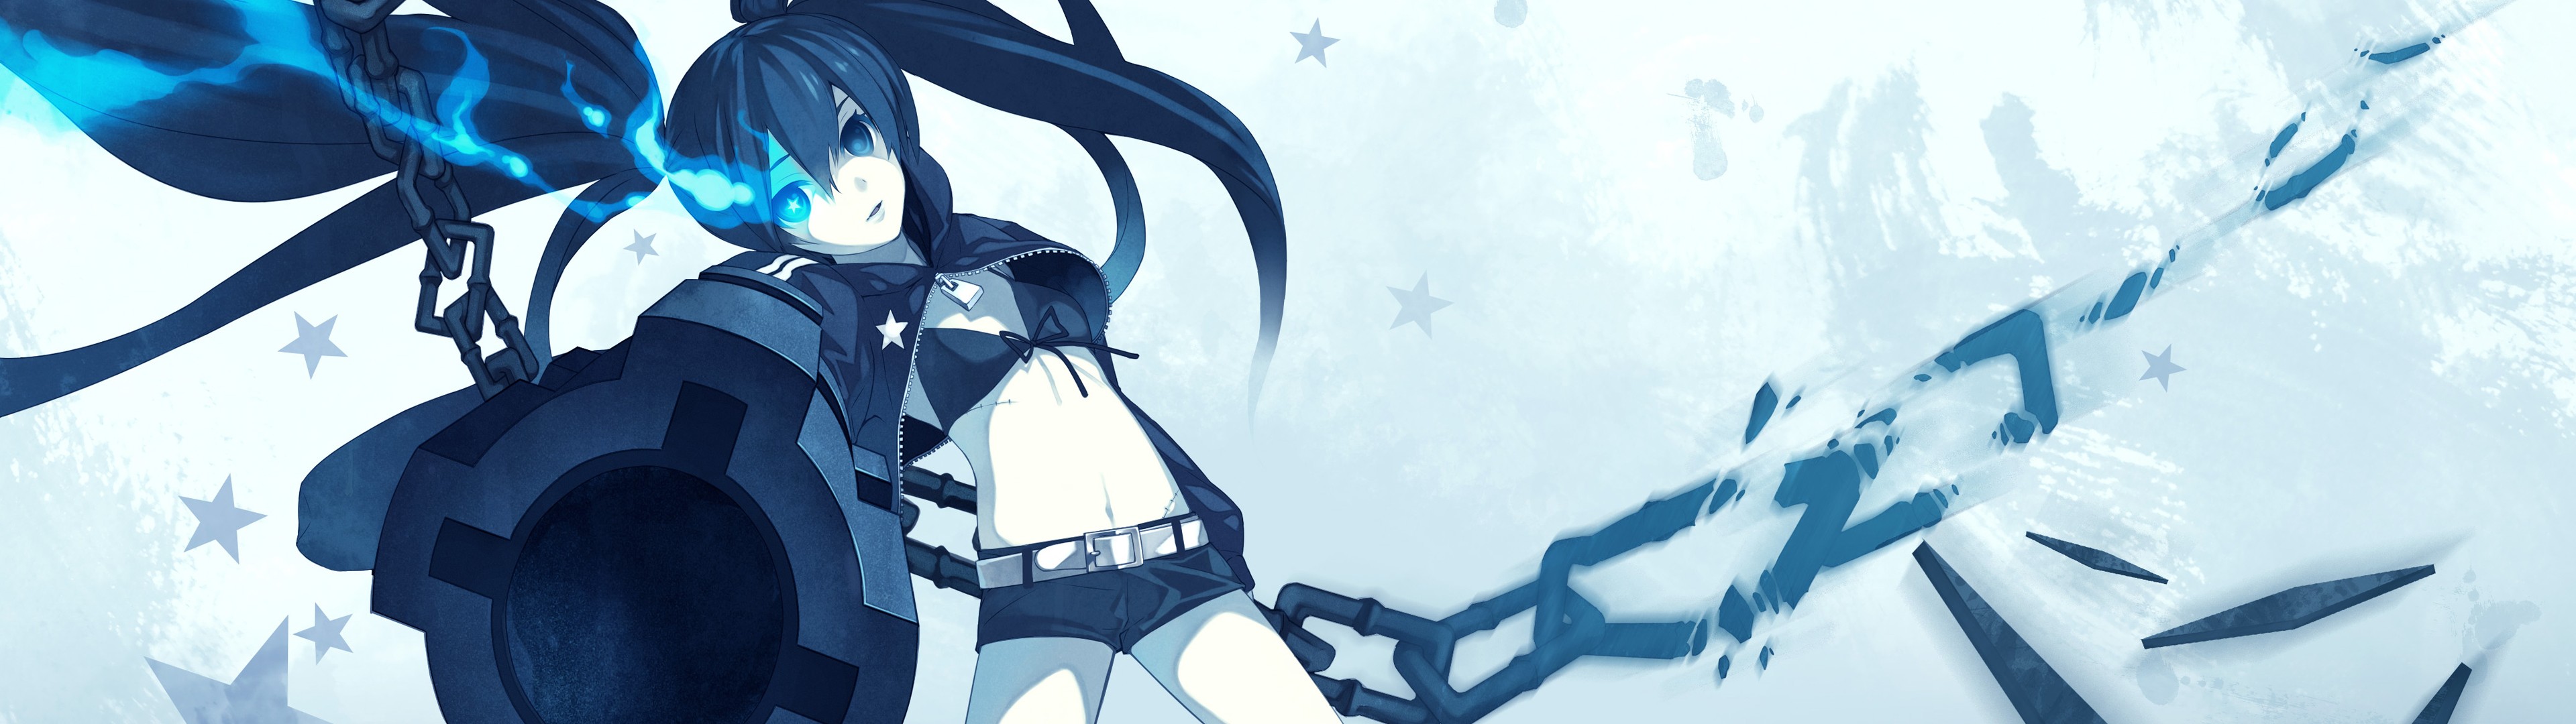 Long Hair Blue Eyes Dual Monitors Black Rock Shooter Anime Girls Chains Anime 3840x1080 Wallpaper Wallhaven Cc